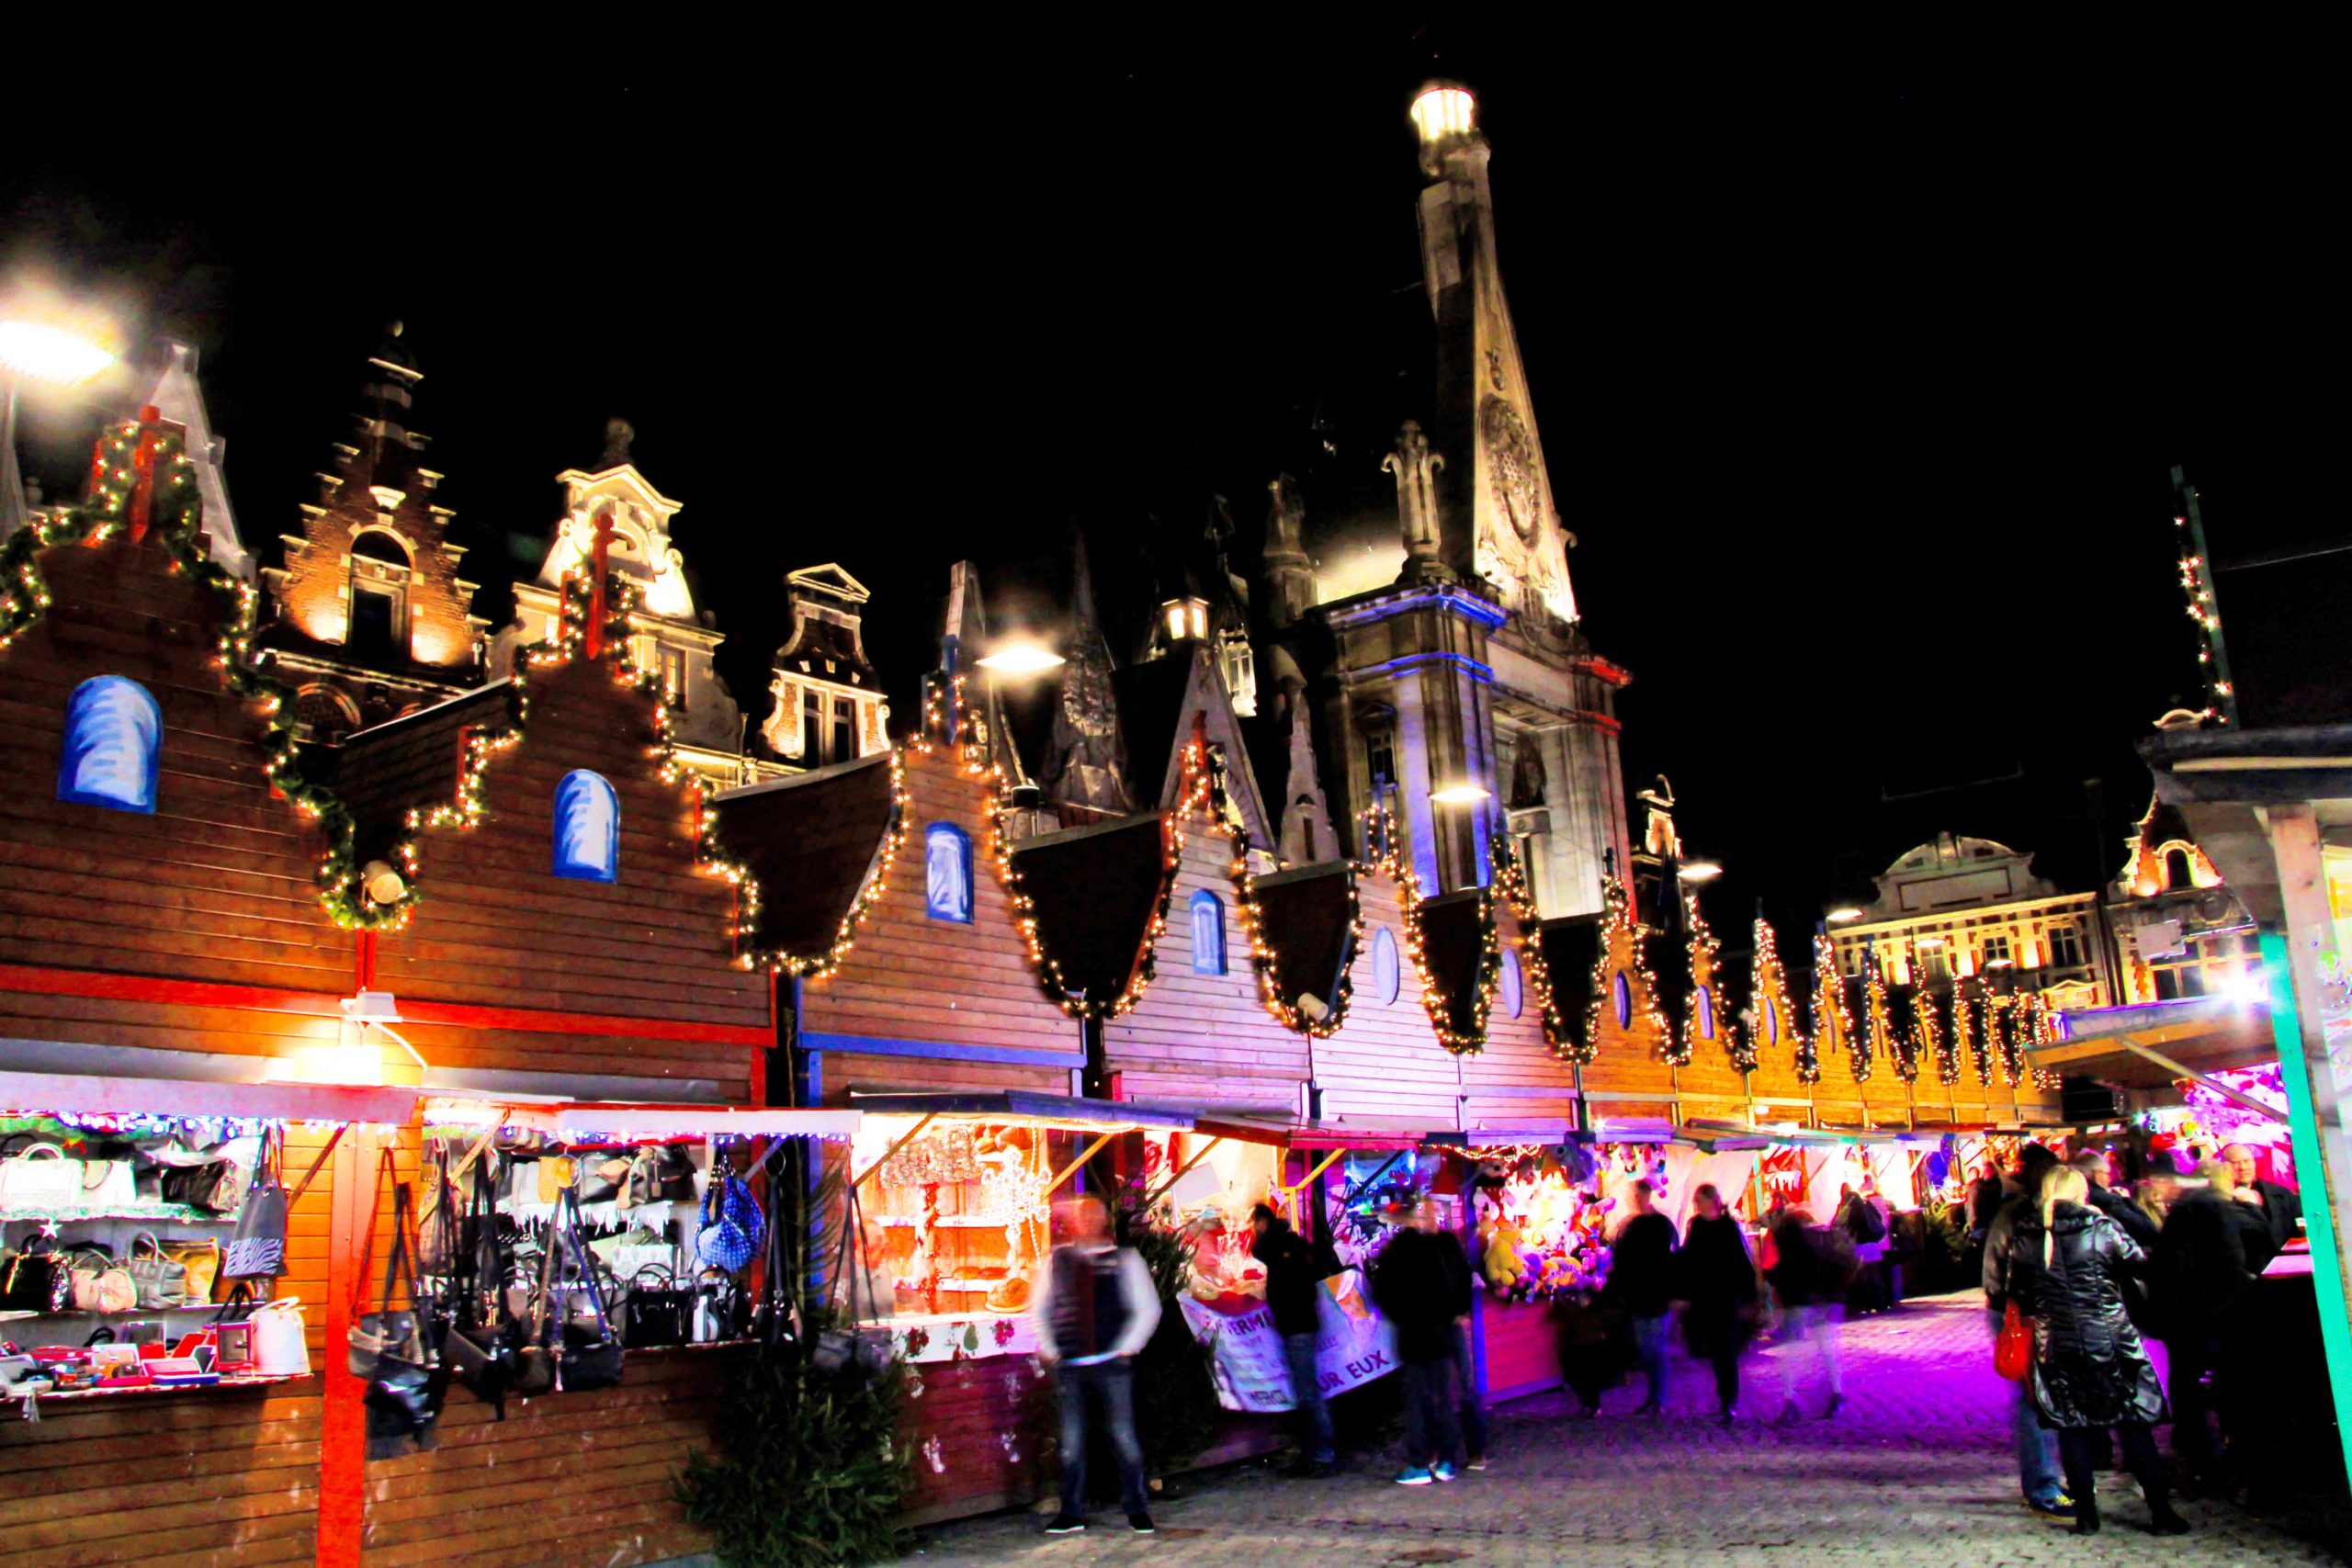 Béthune Christmas Market © Guillaume Bavière - licence [CC BY-SA 2.0] from Wikimedia Commons